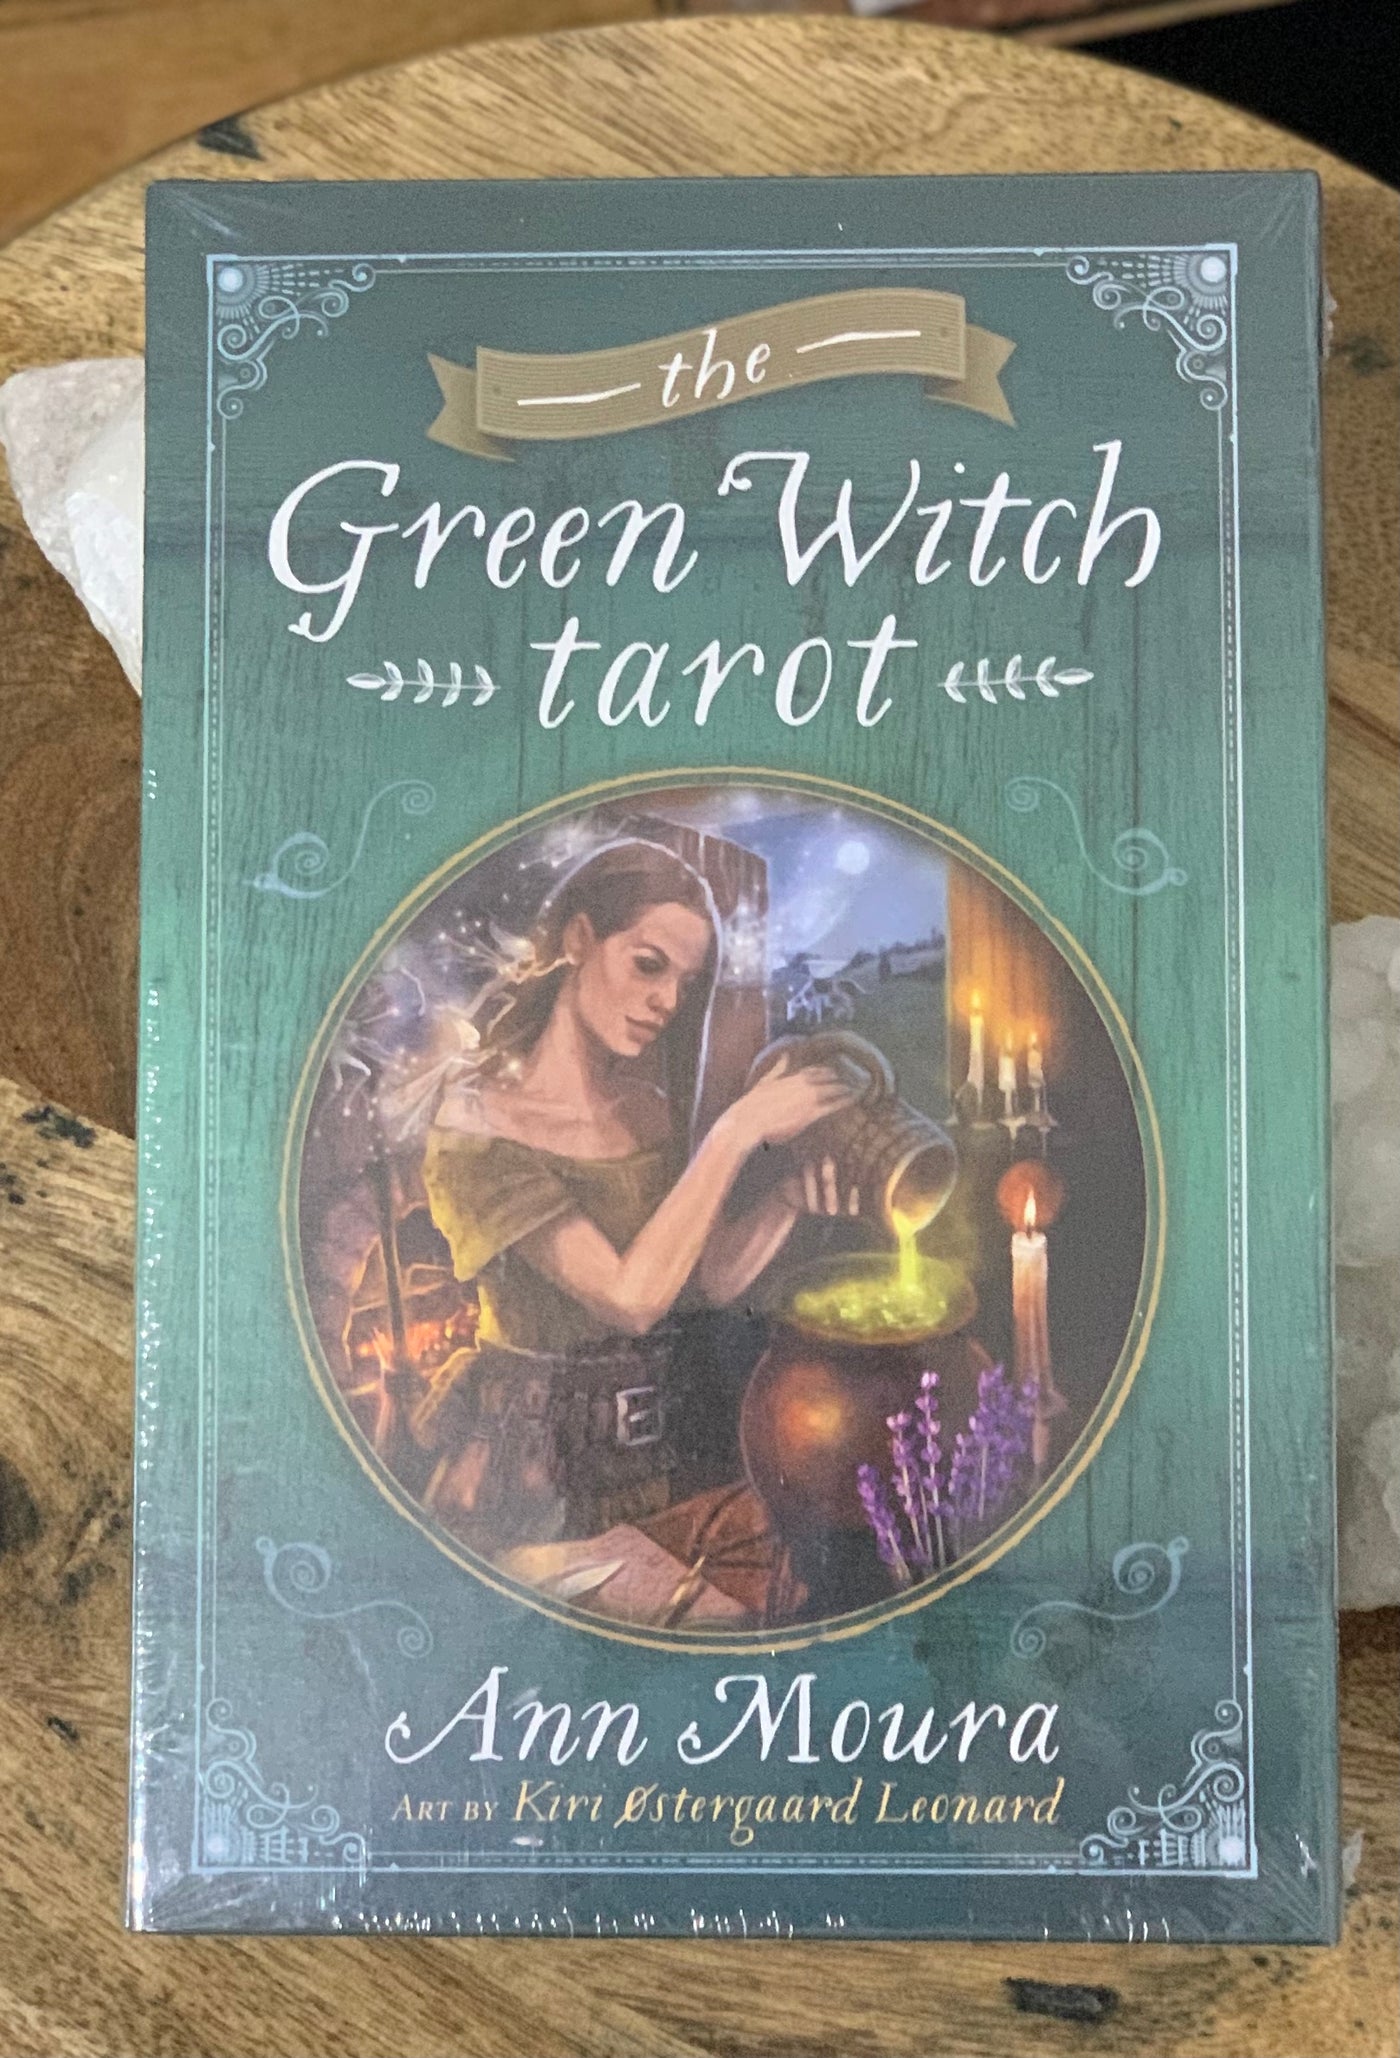 The Green Witch Tarot set